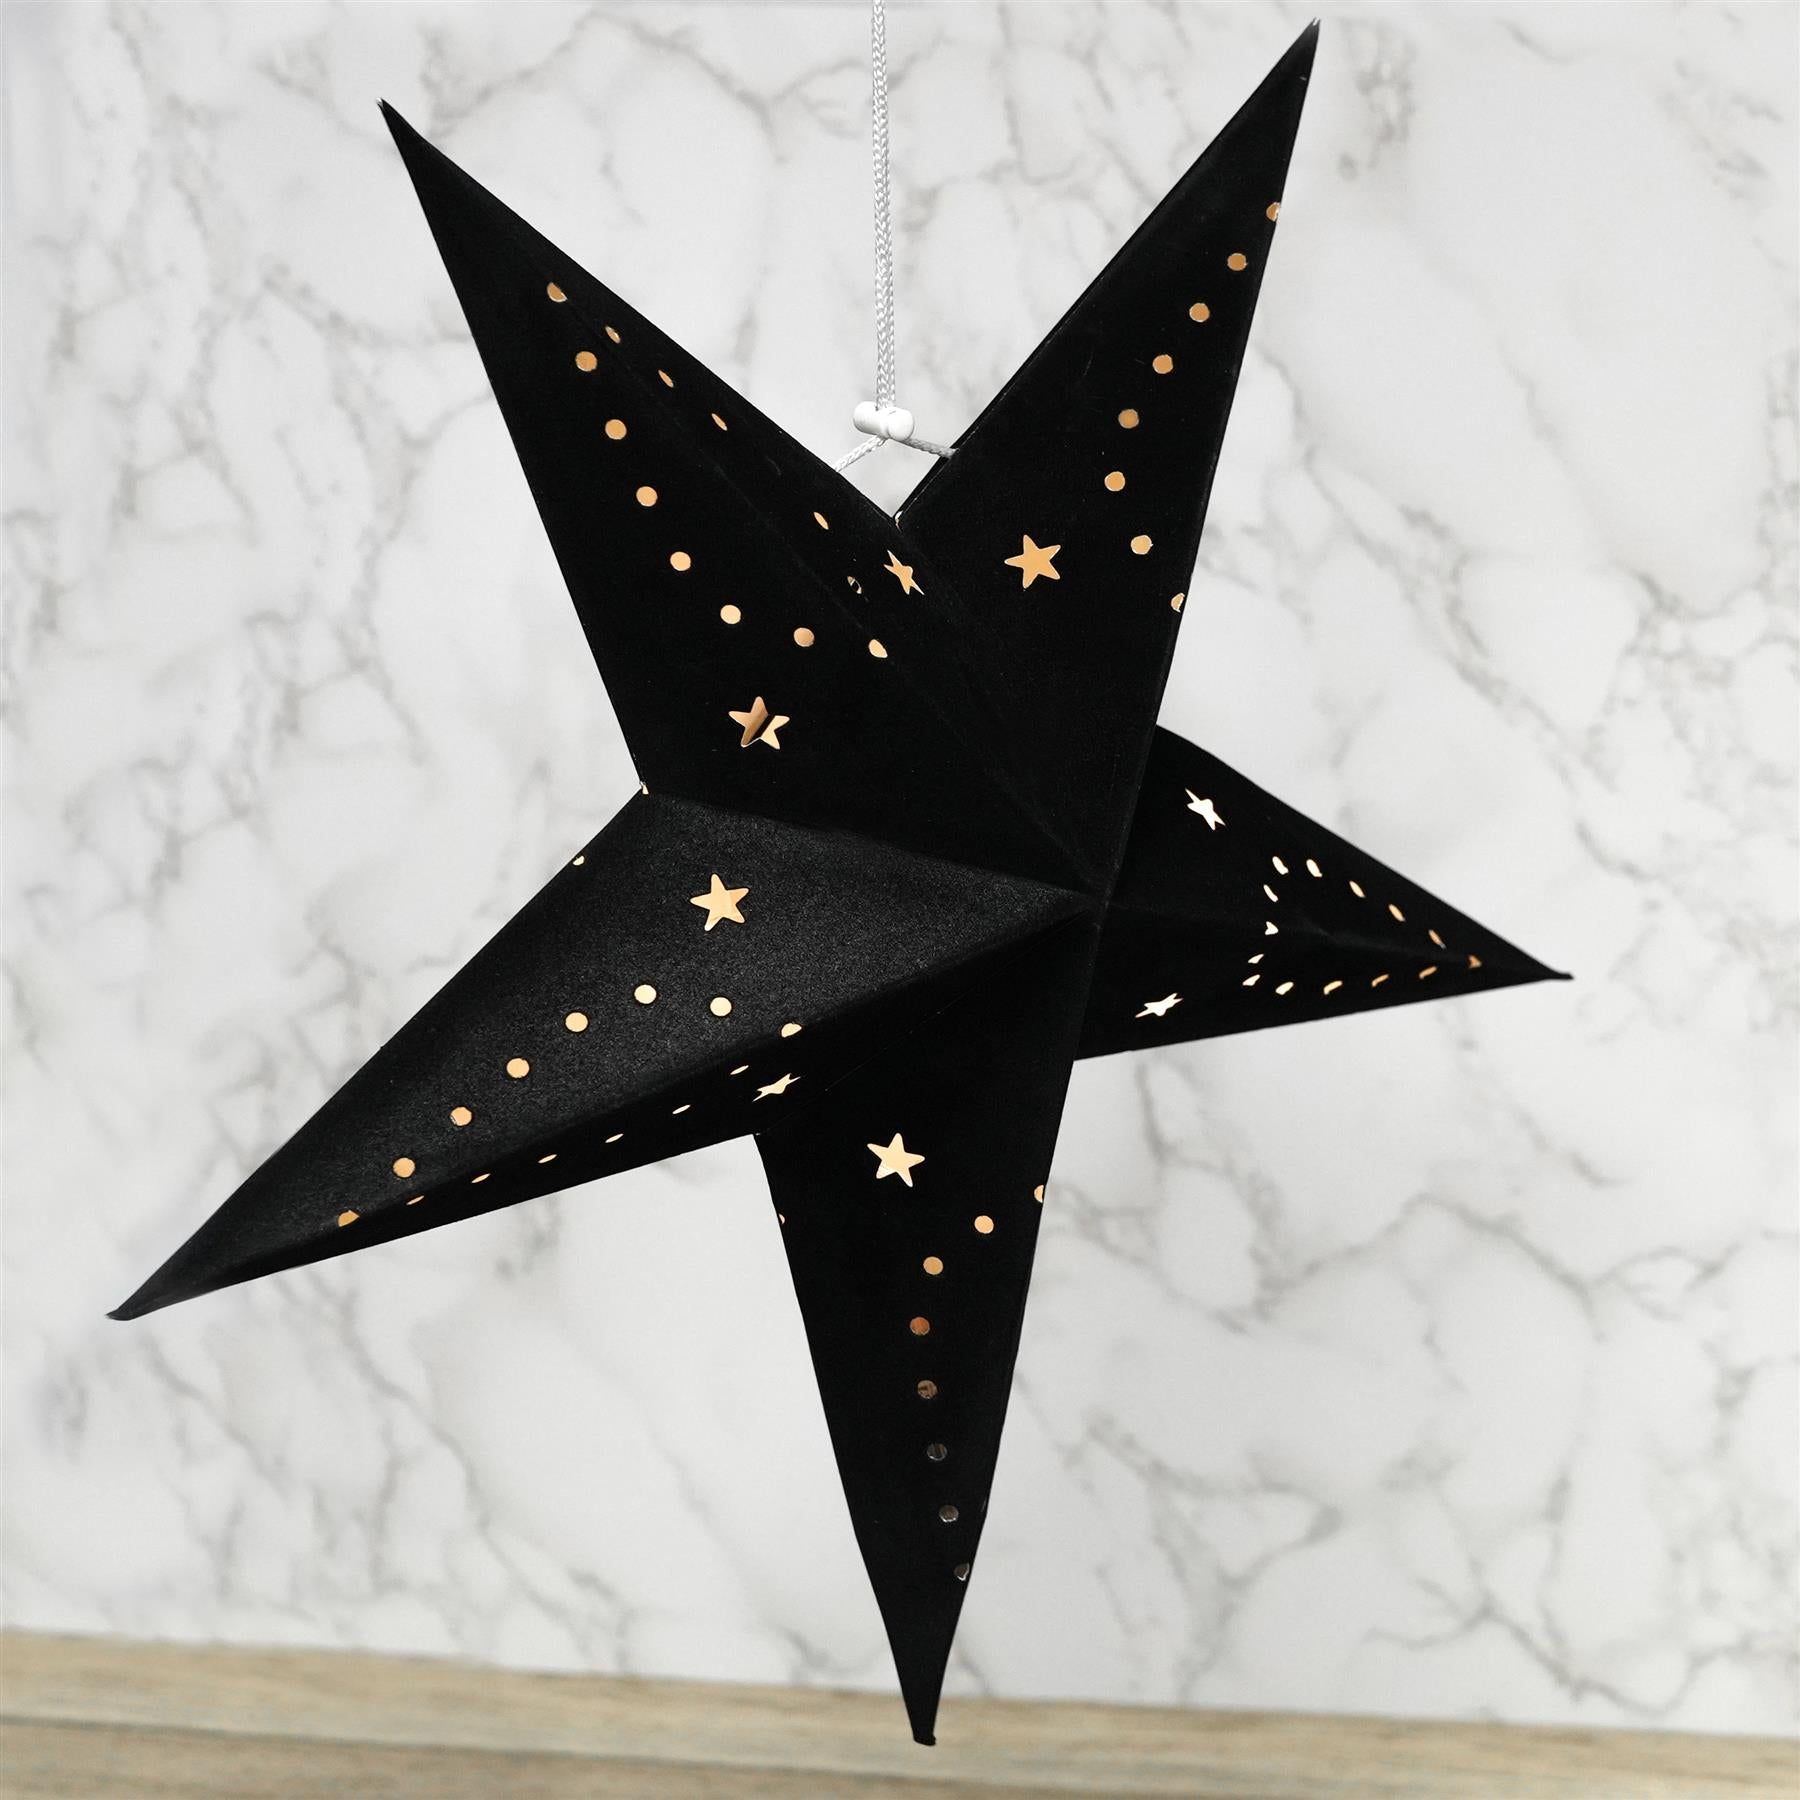 Geezy Decorative Star 45 cm Black Velvet Star